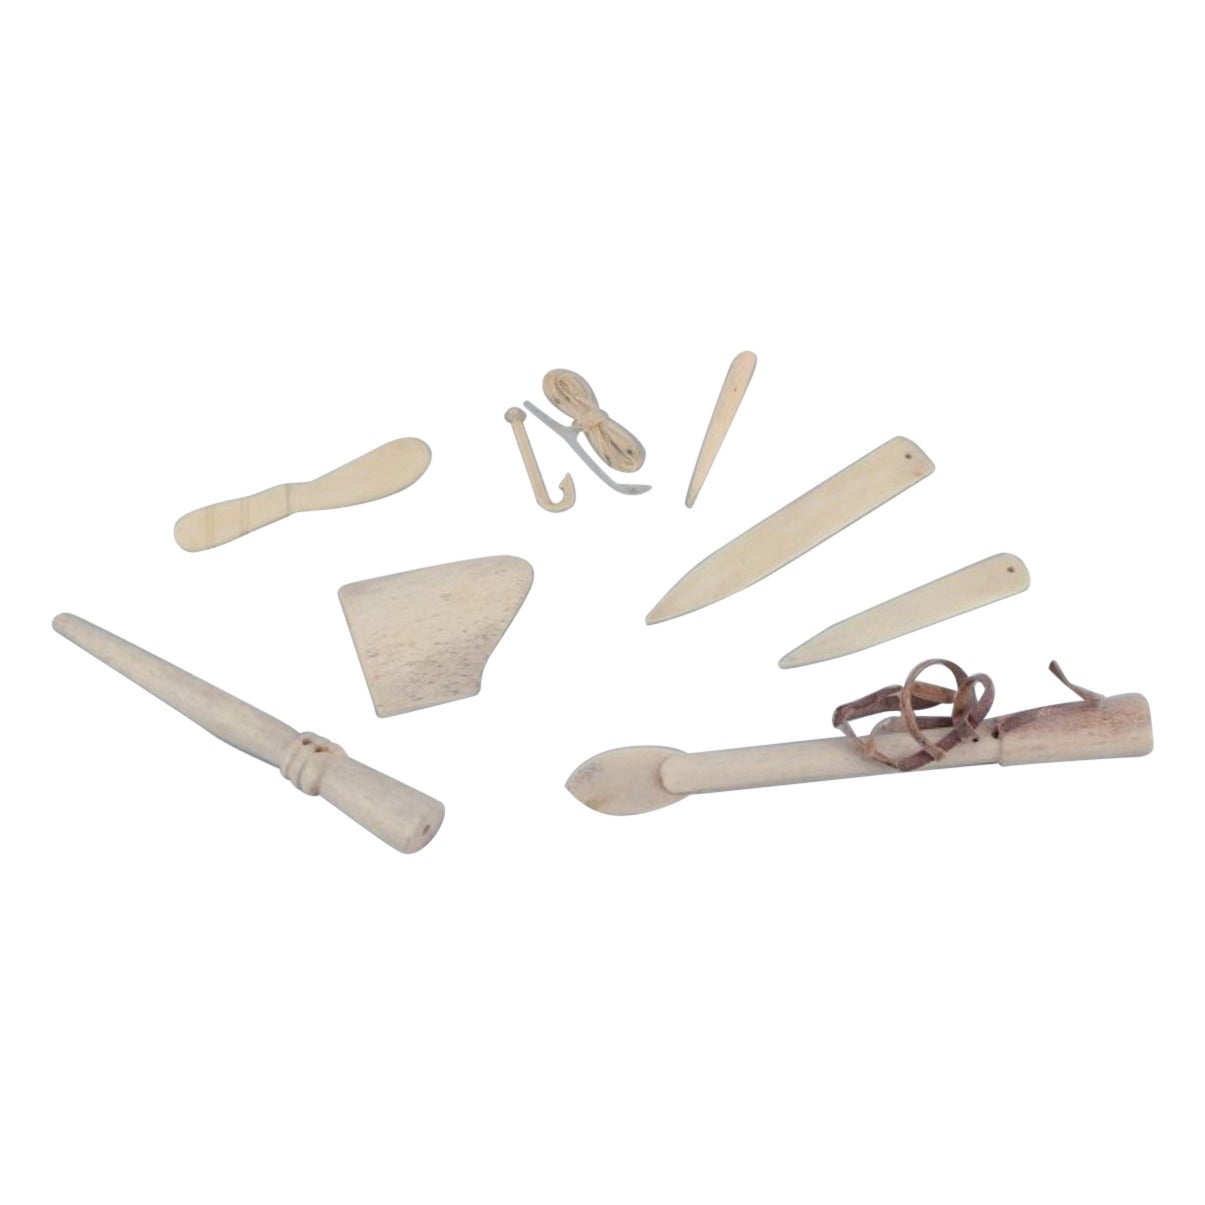 Greenlandica, collection of seven various bone tools